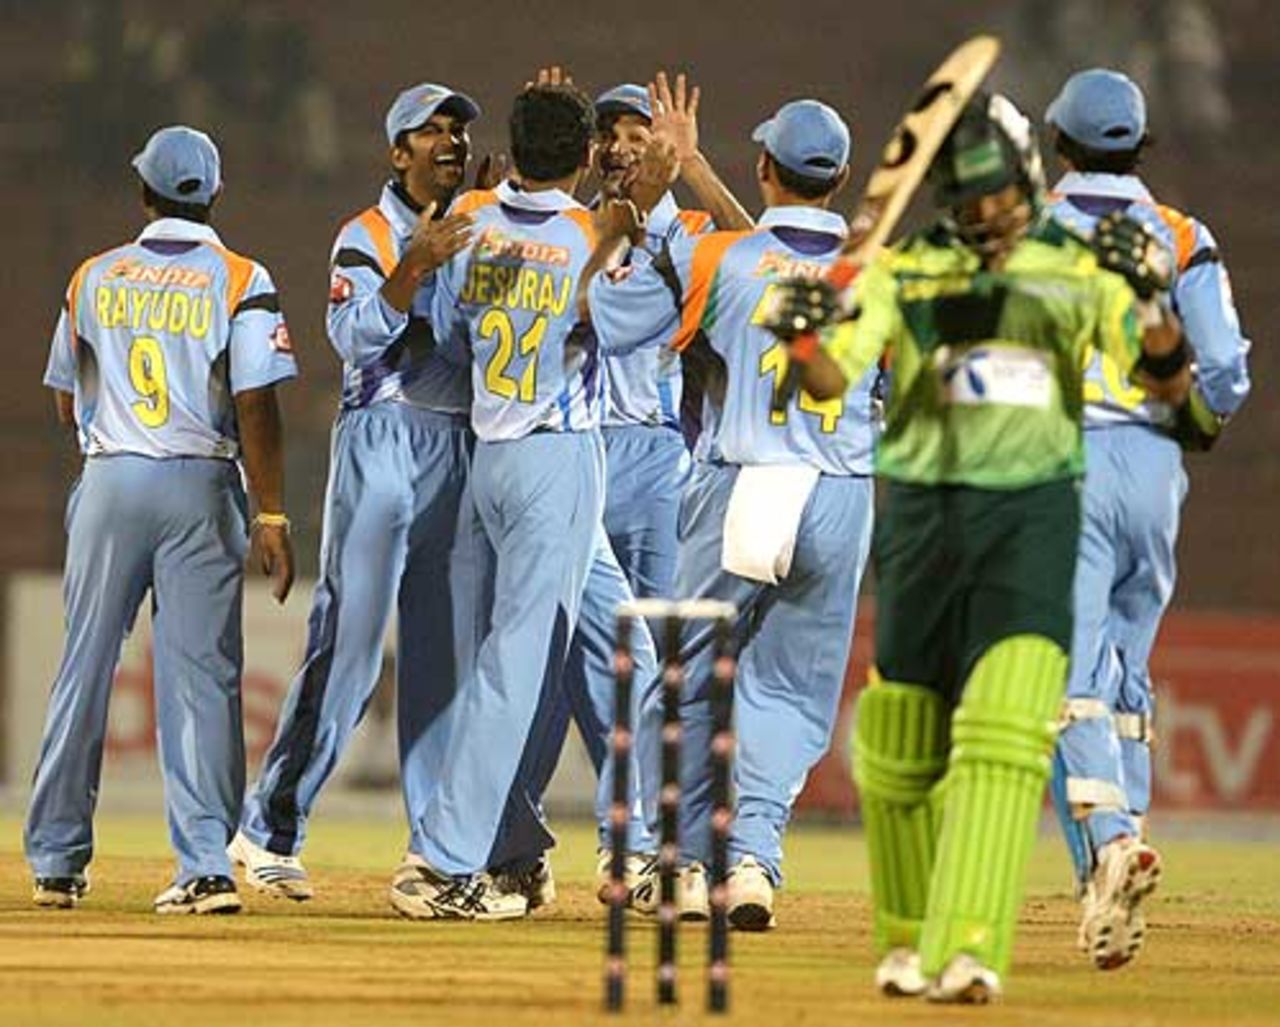 India XI celebrate the fall of Imran Nazir, India XI v Pakistan XI, ICL 20s World Series, Ahmedabad, November 24, 2008